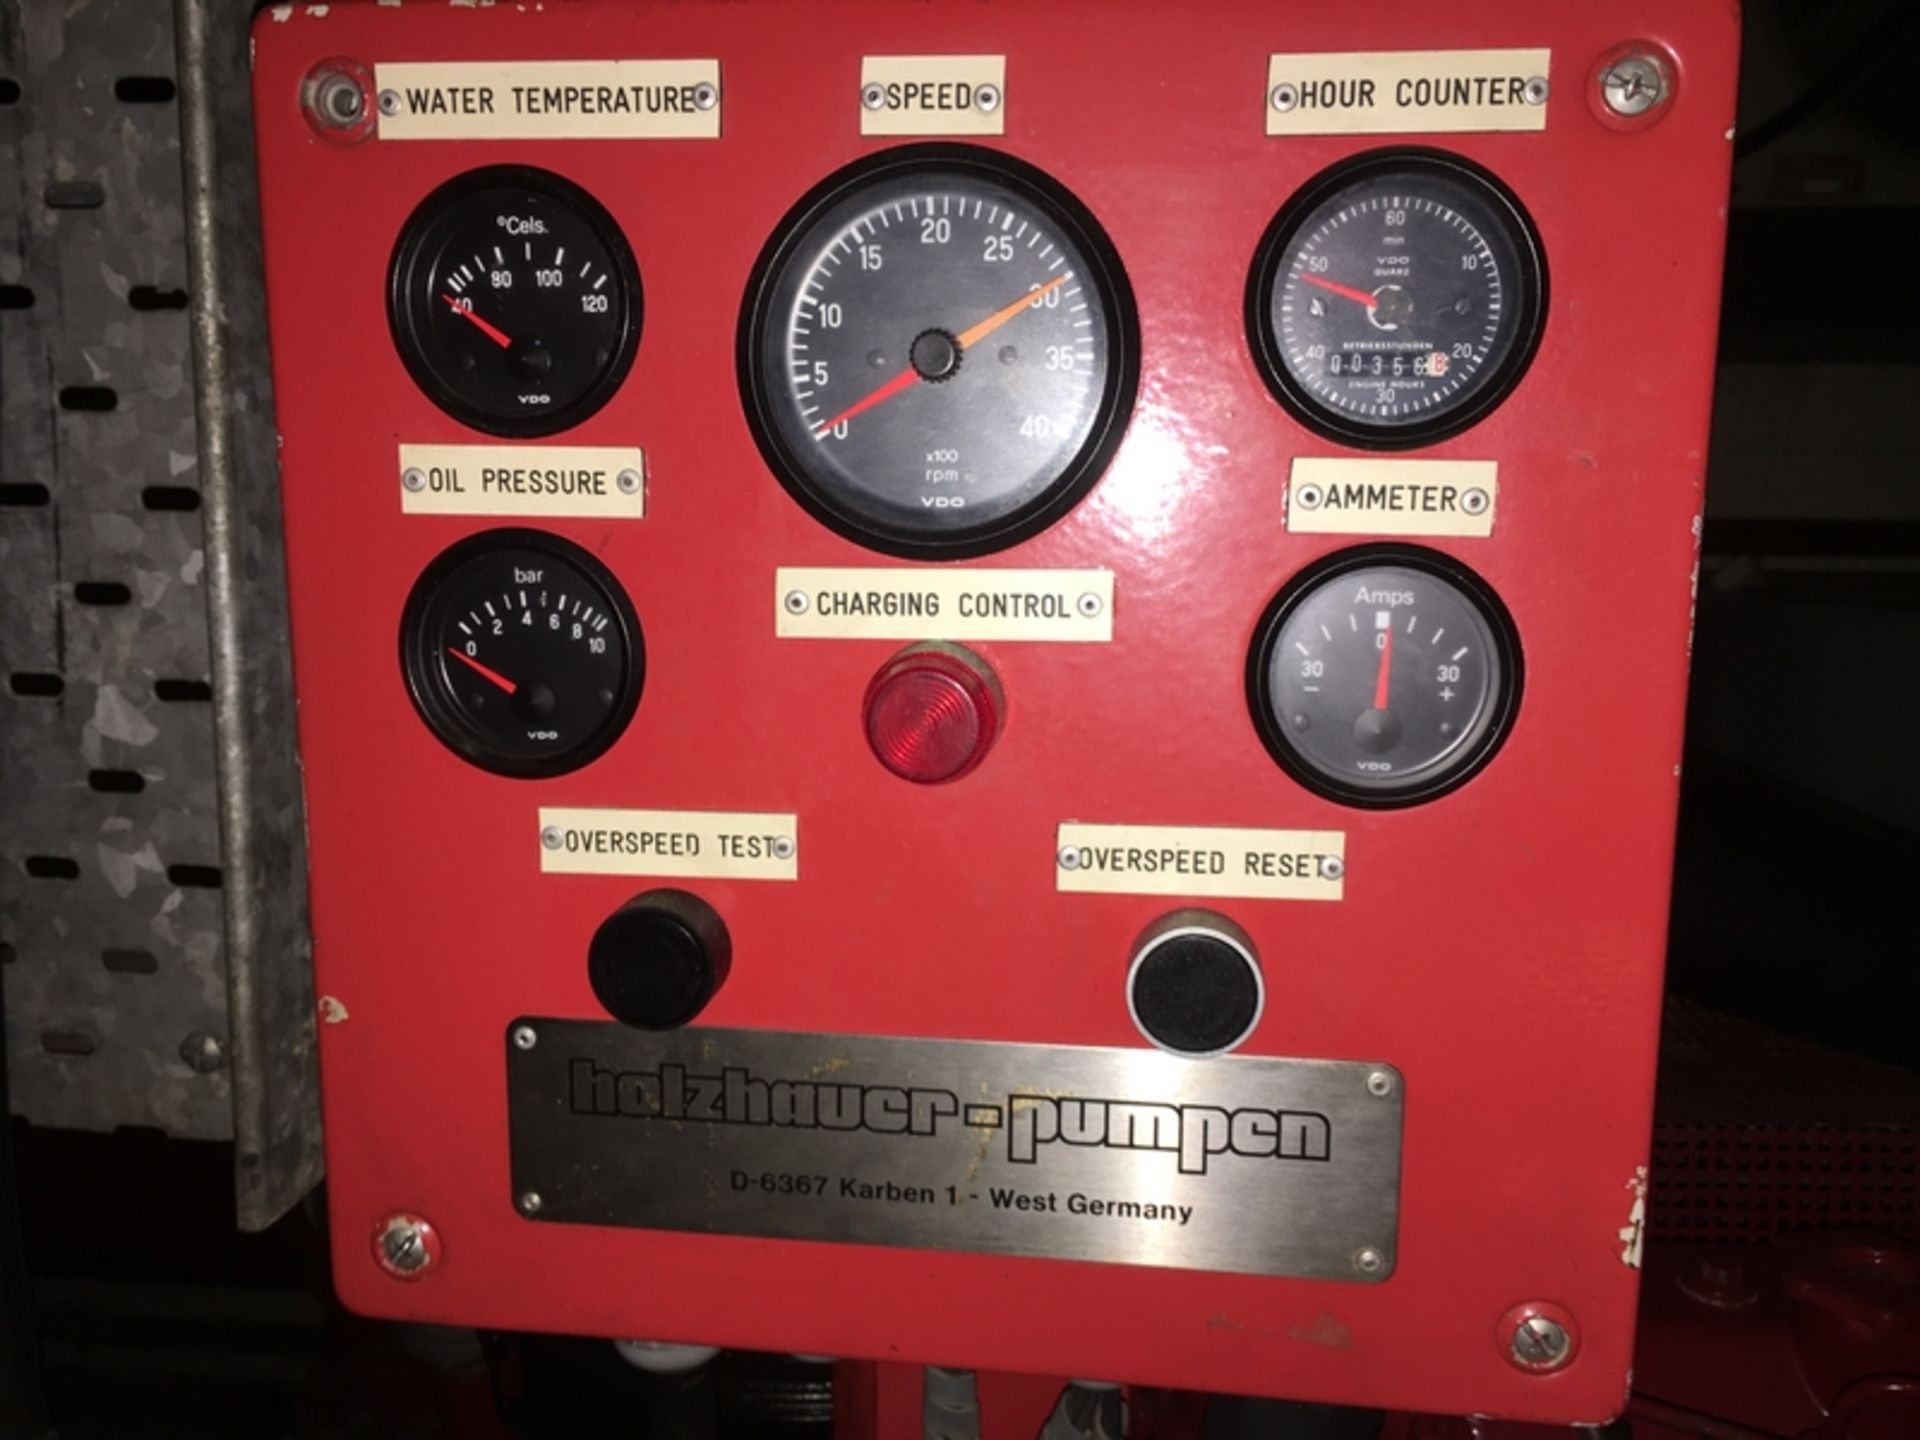 Holzhauer-Pumpen Diesel Engine Fire Control Pump System - Image 6 of 11